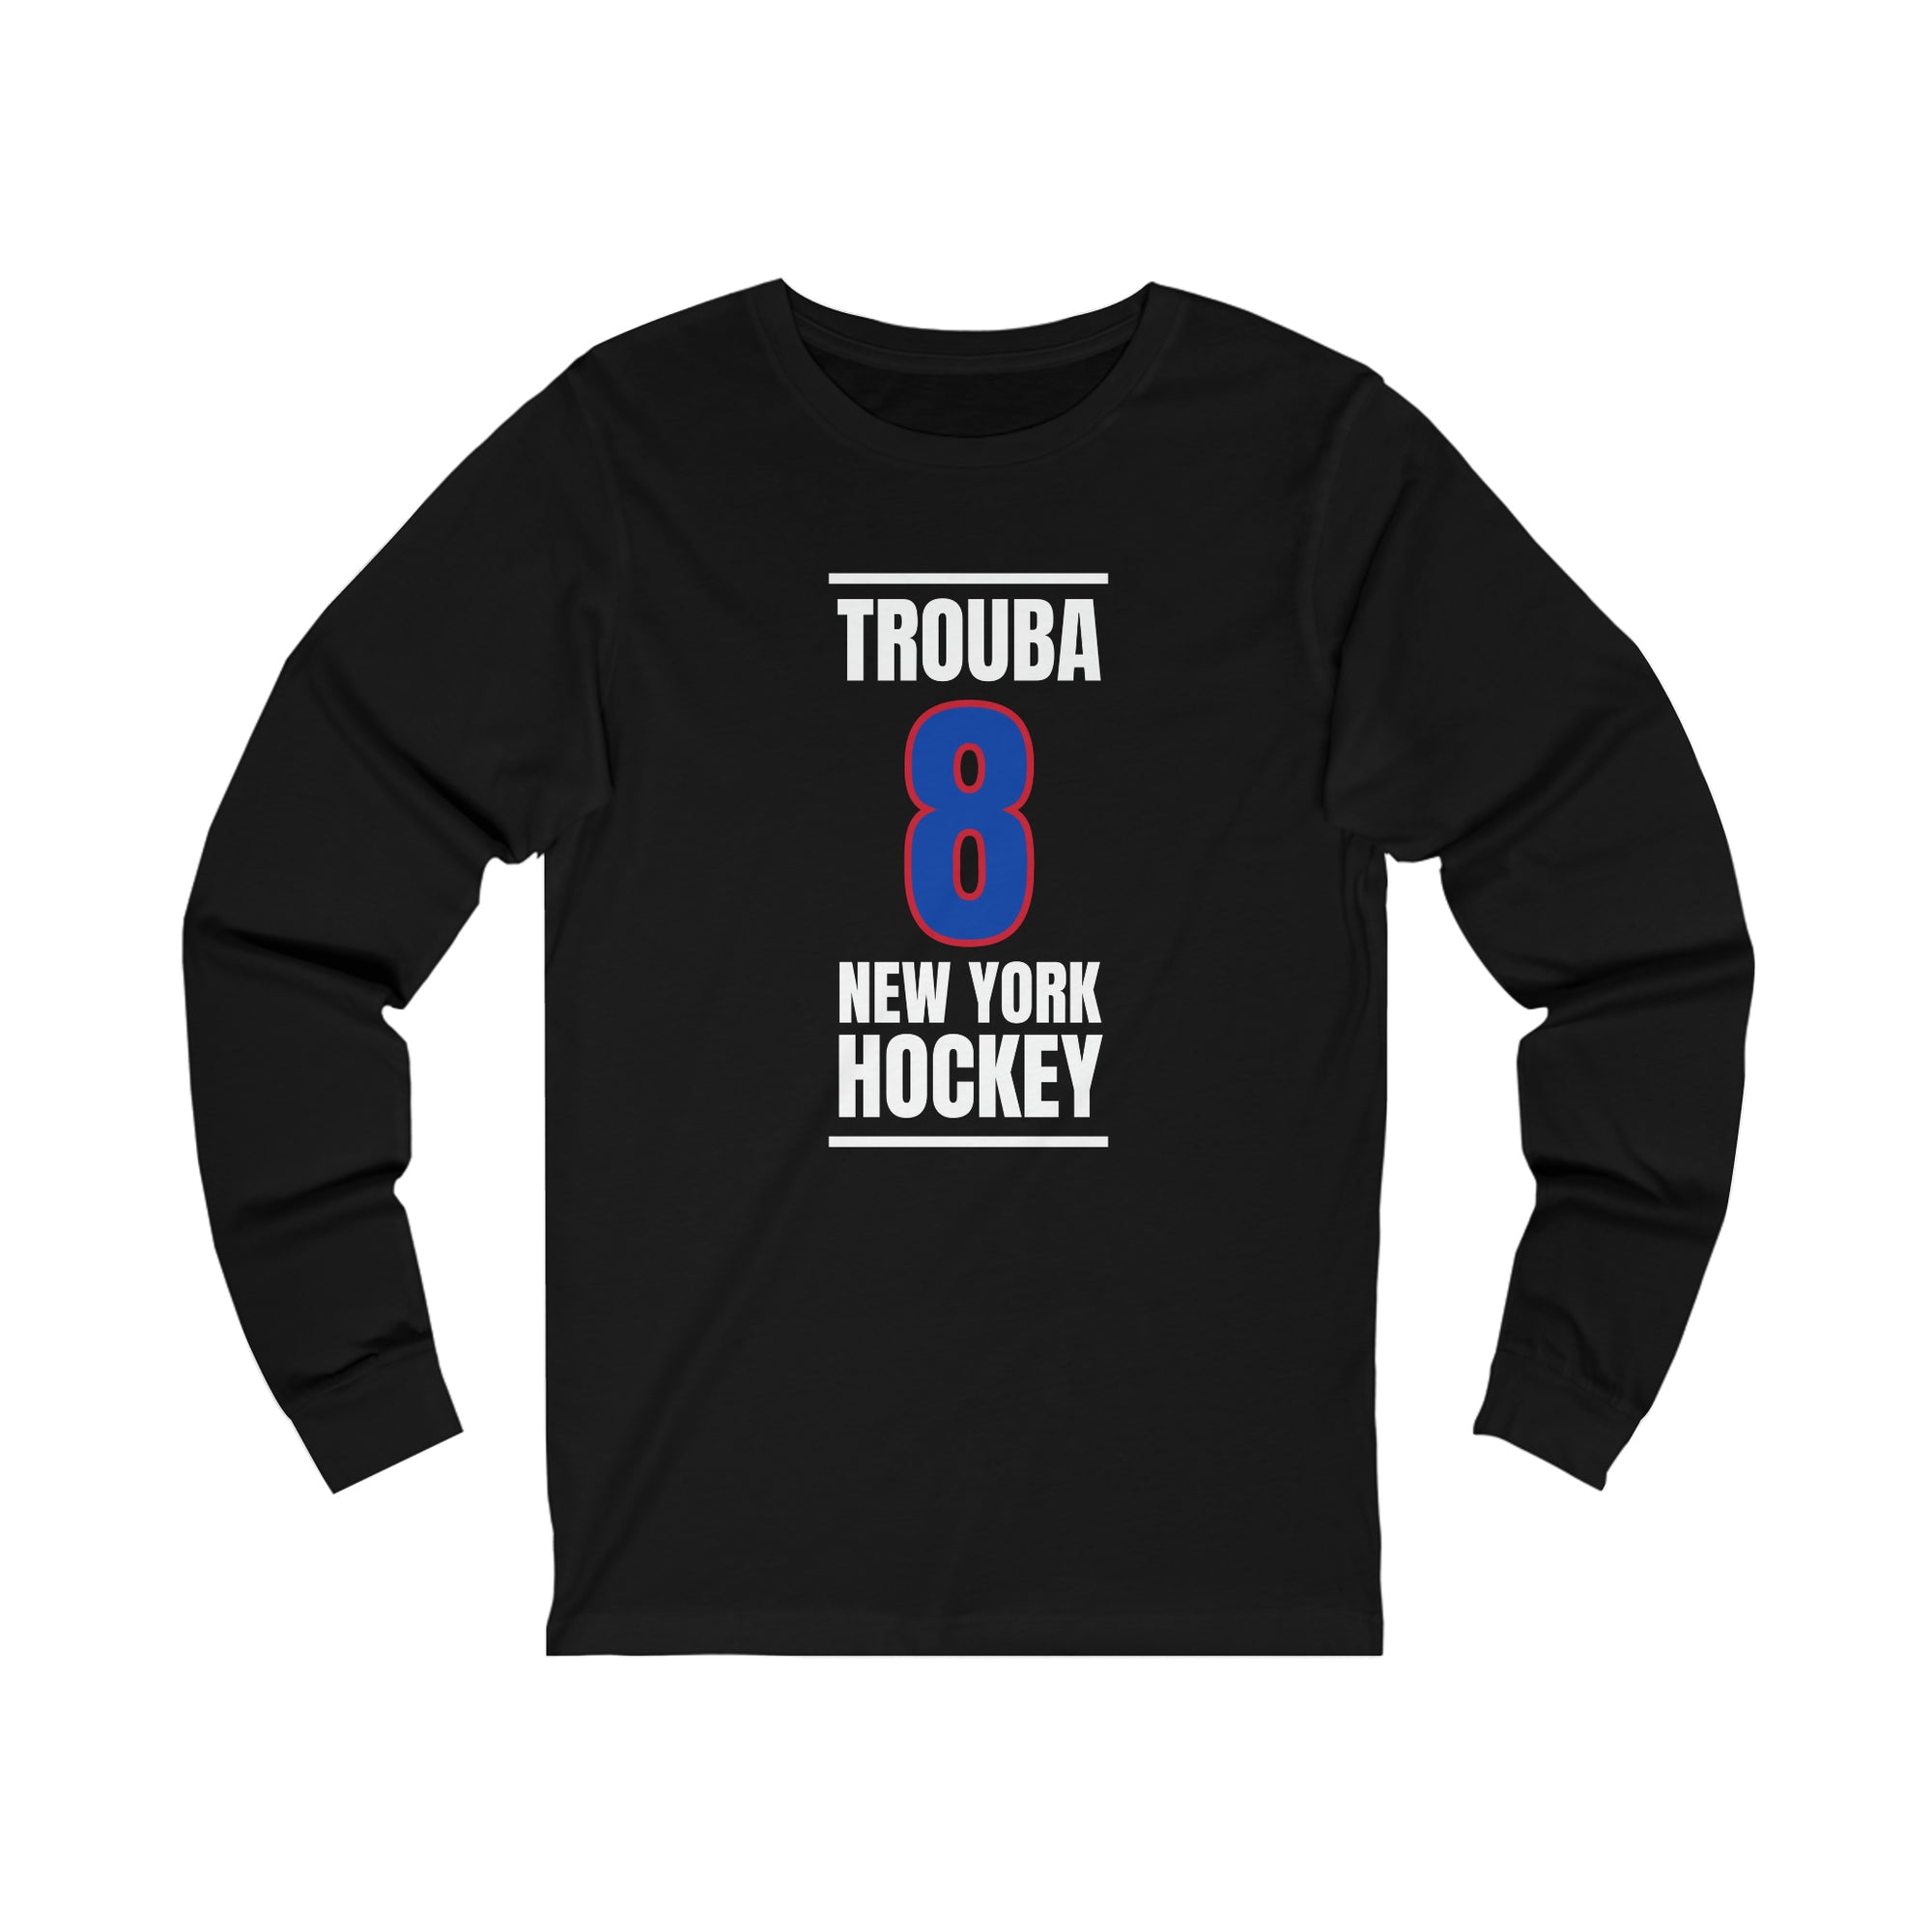 Trouba 8 New York Hockey Royal Blue Vertical Design Unisex Jersey Long Sleeve Shirt